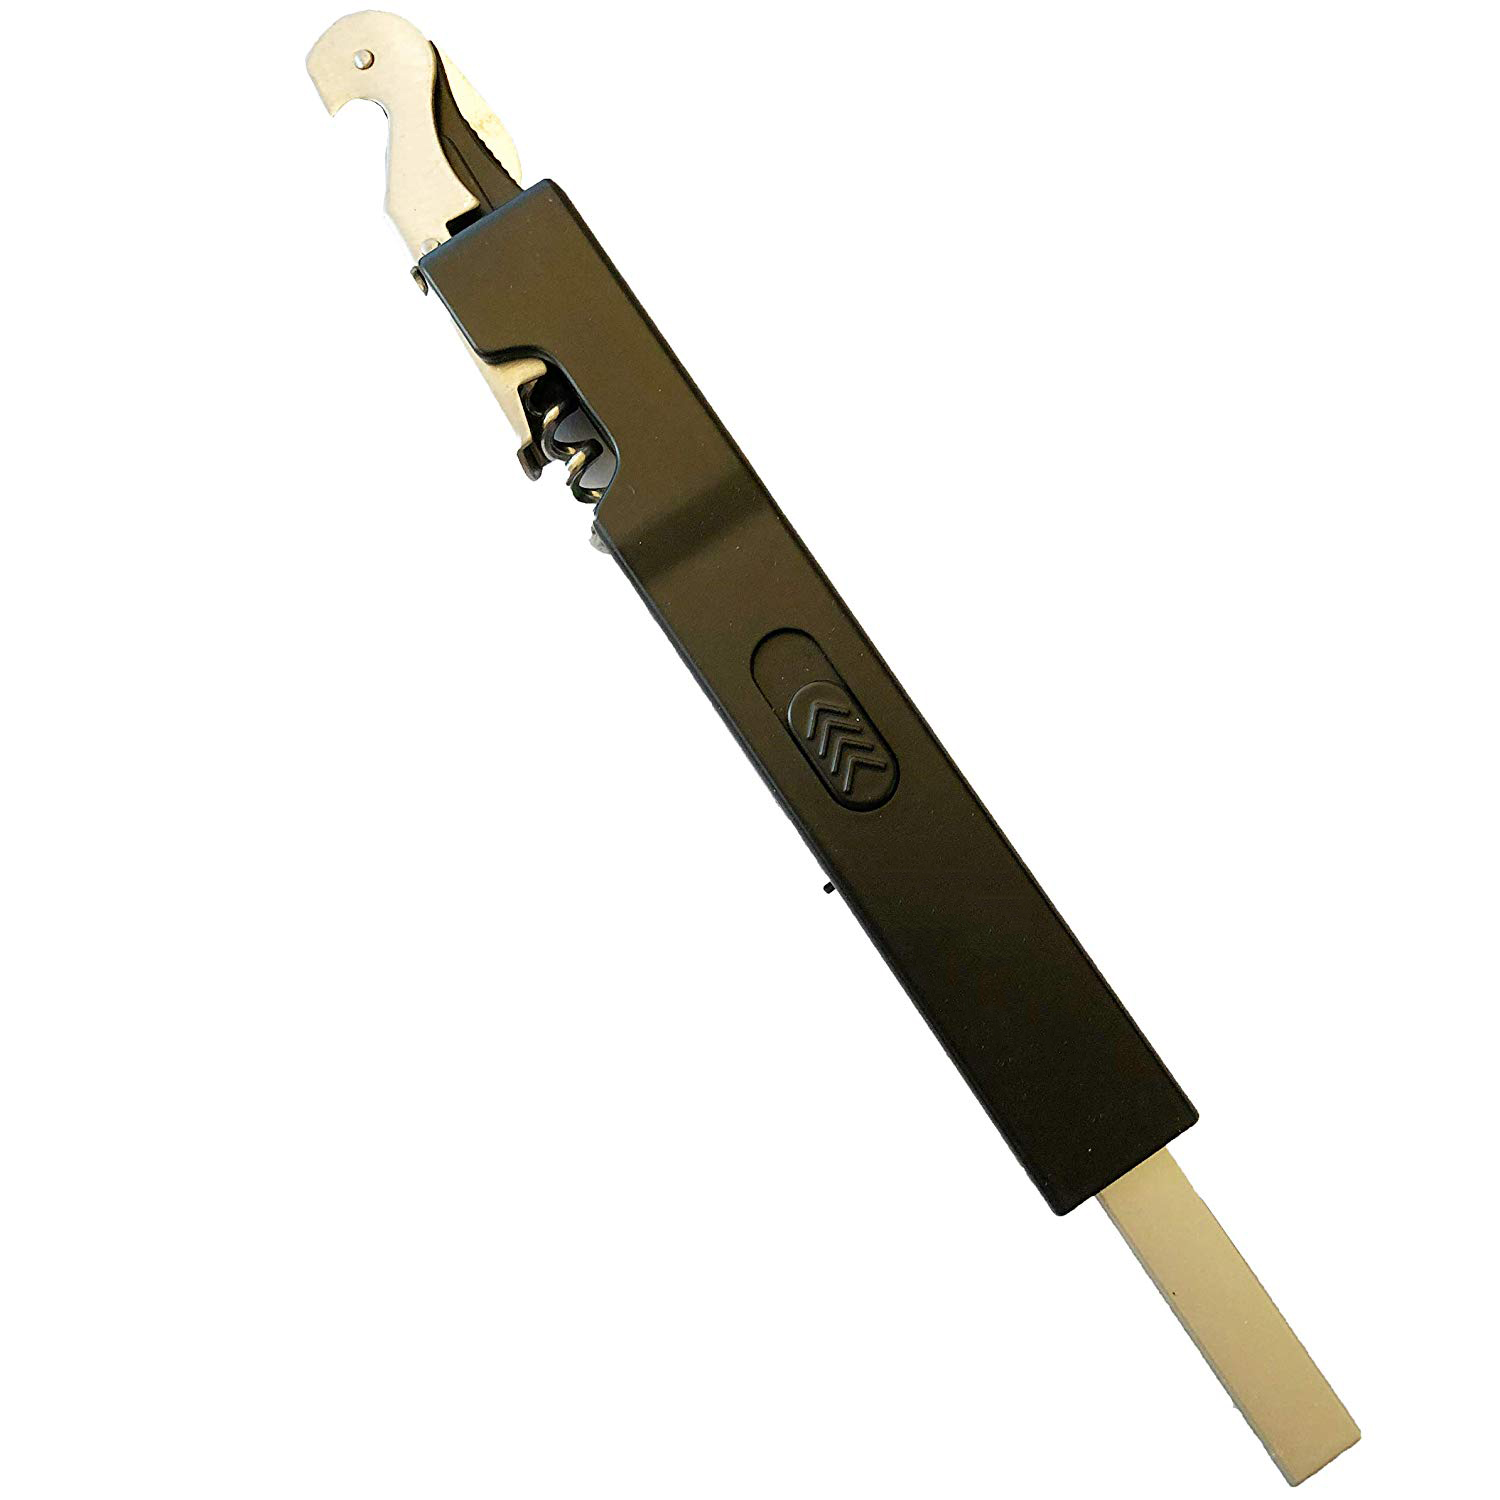 SAFE USB Long Lighter Rechargeable Windproof Kitchen lighter, Flameless Electric Lighter no gas